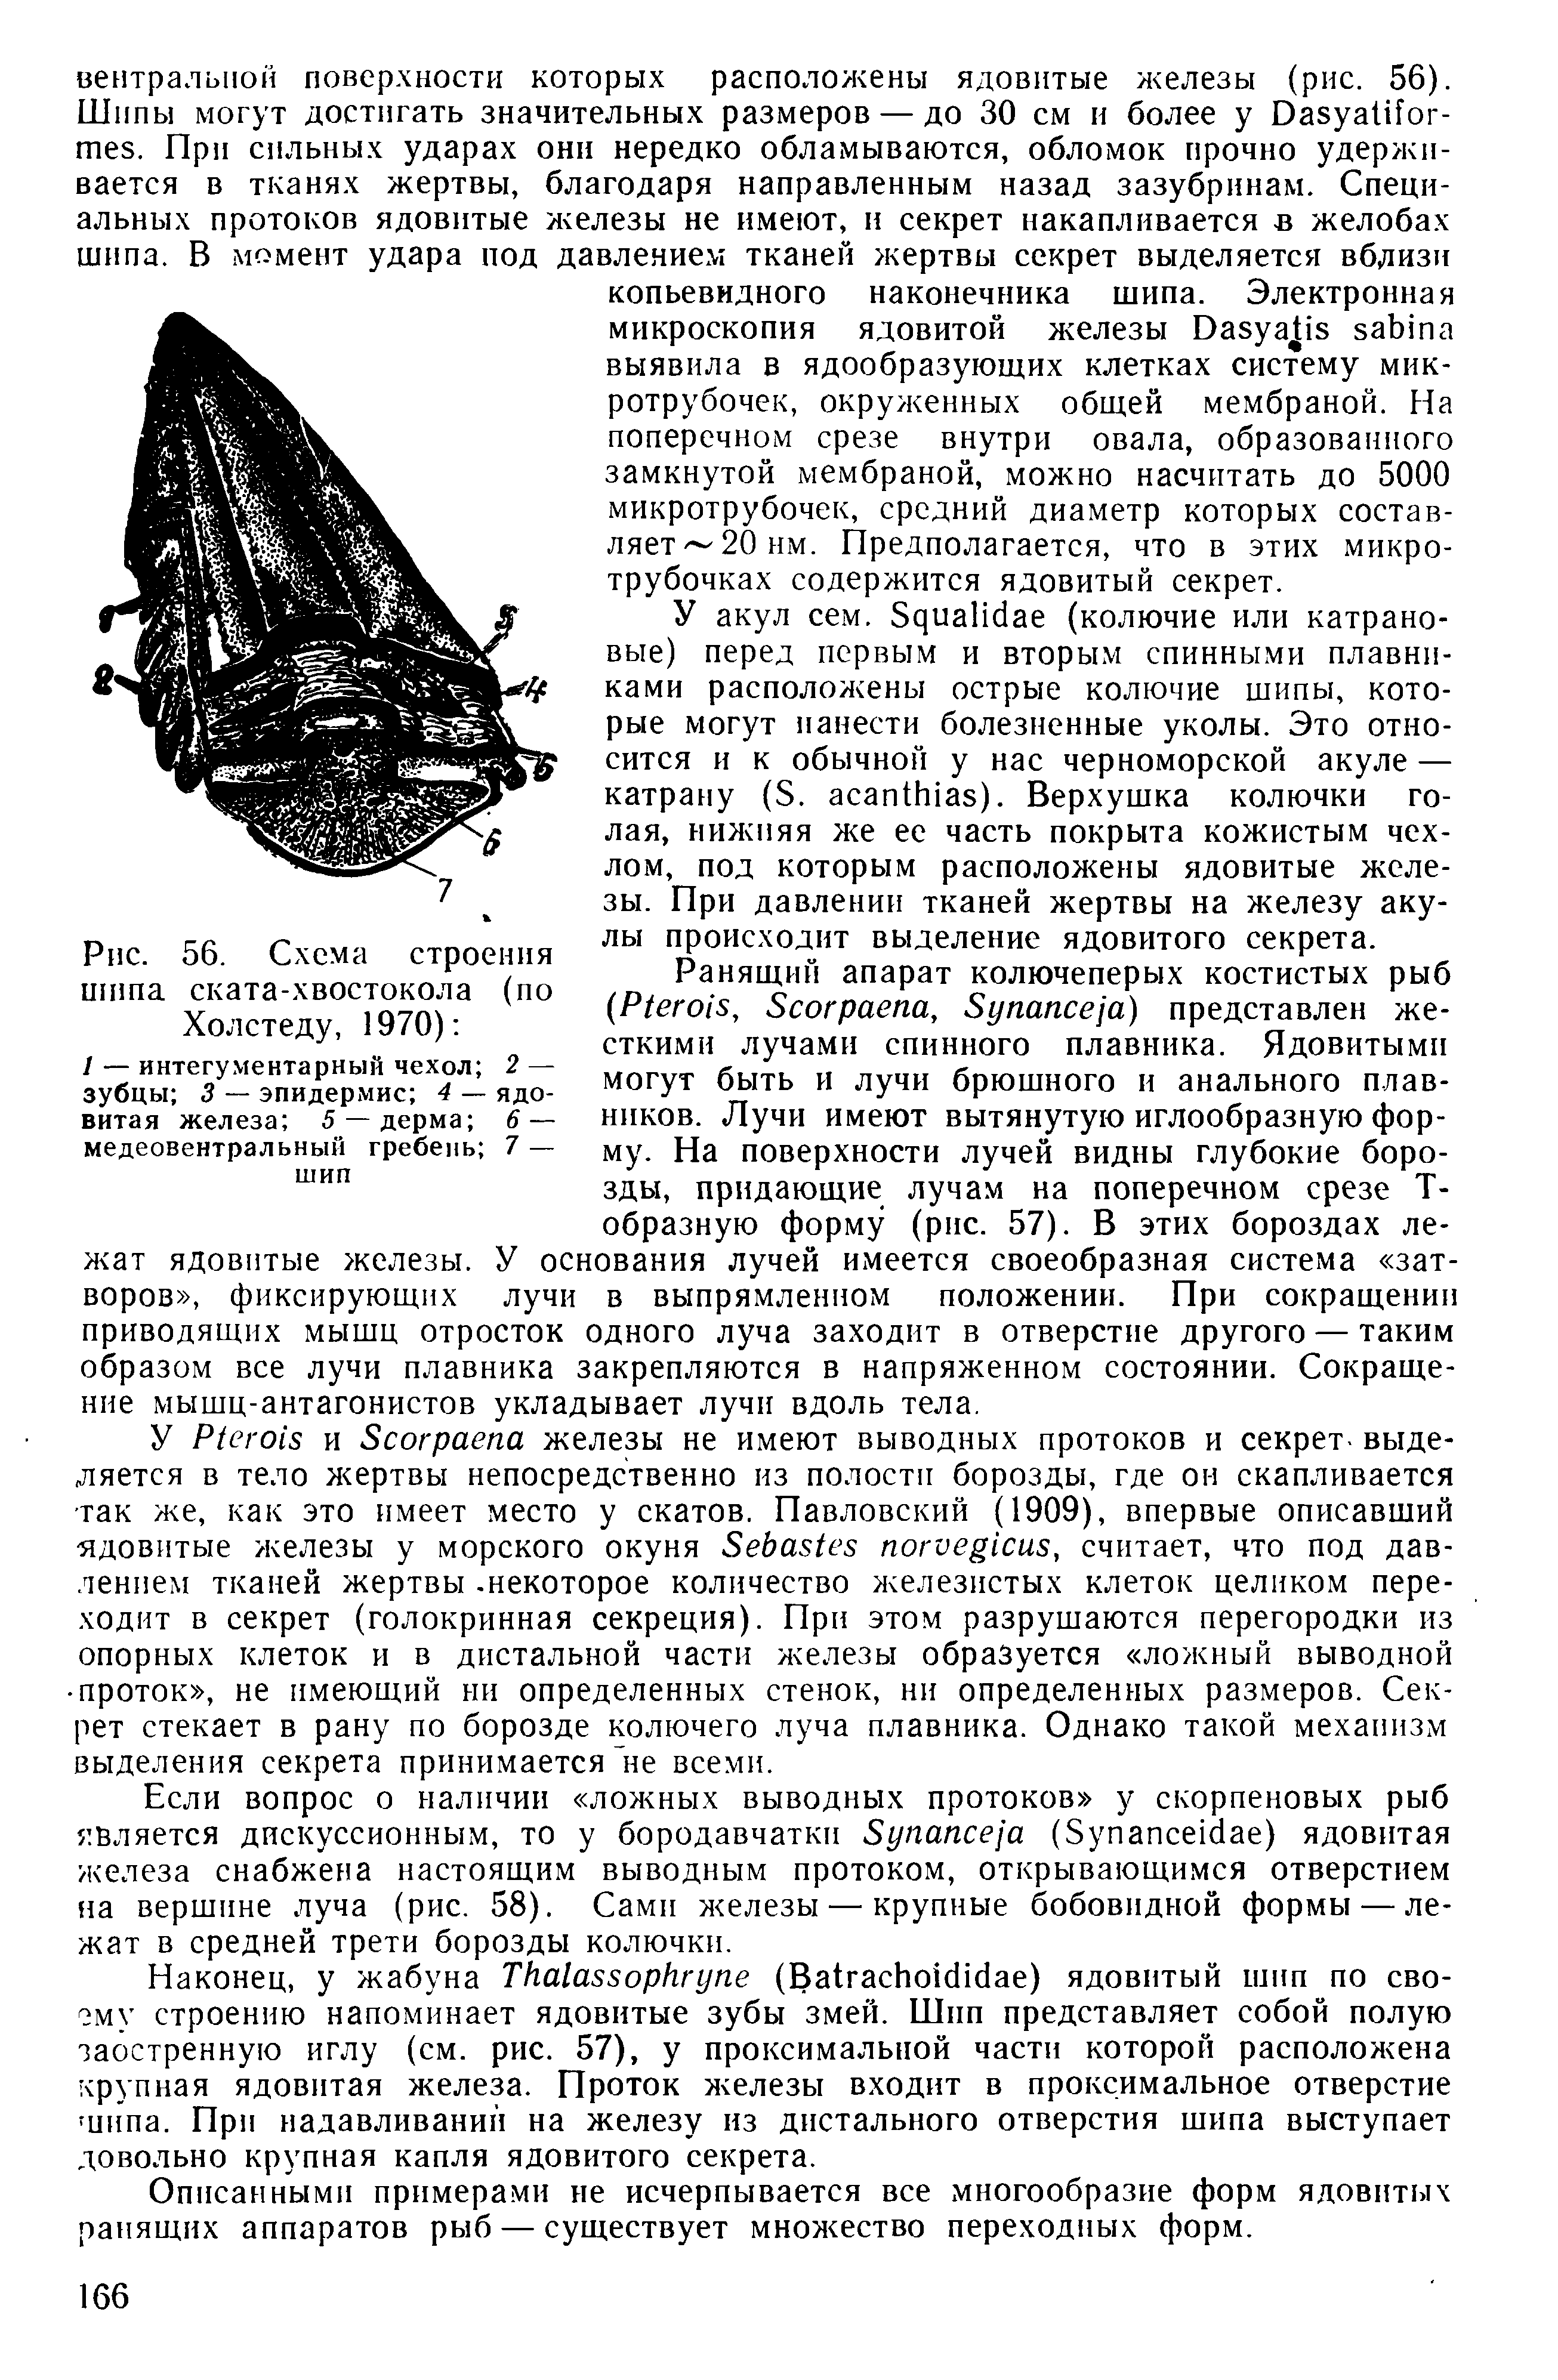 Рис. 56. Схема строения шипа ската-хвостокола (по Холстеду, 1970) ...